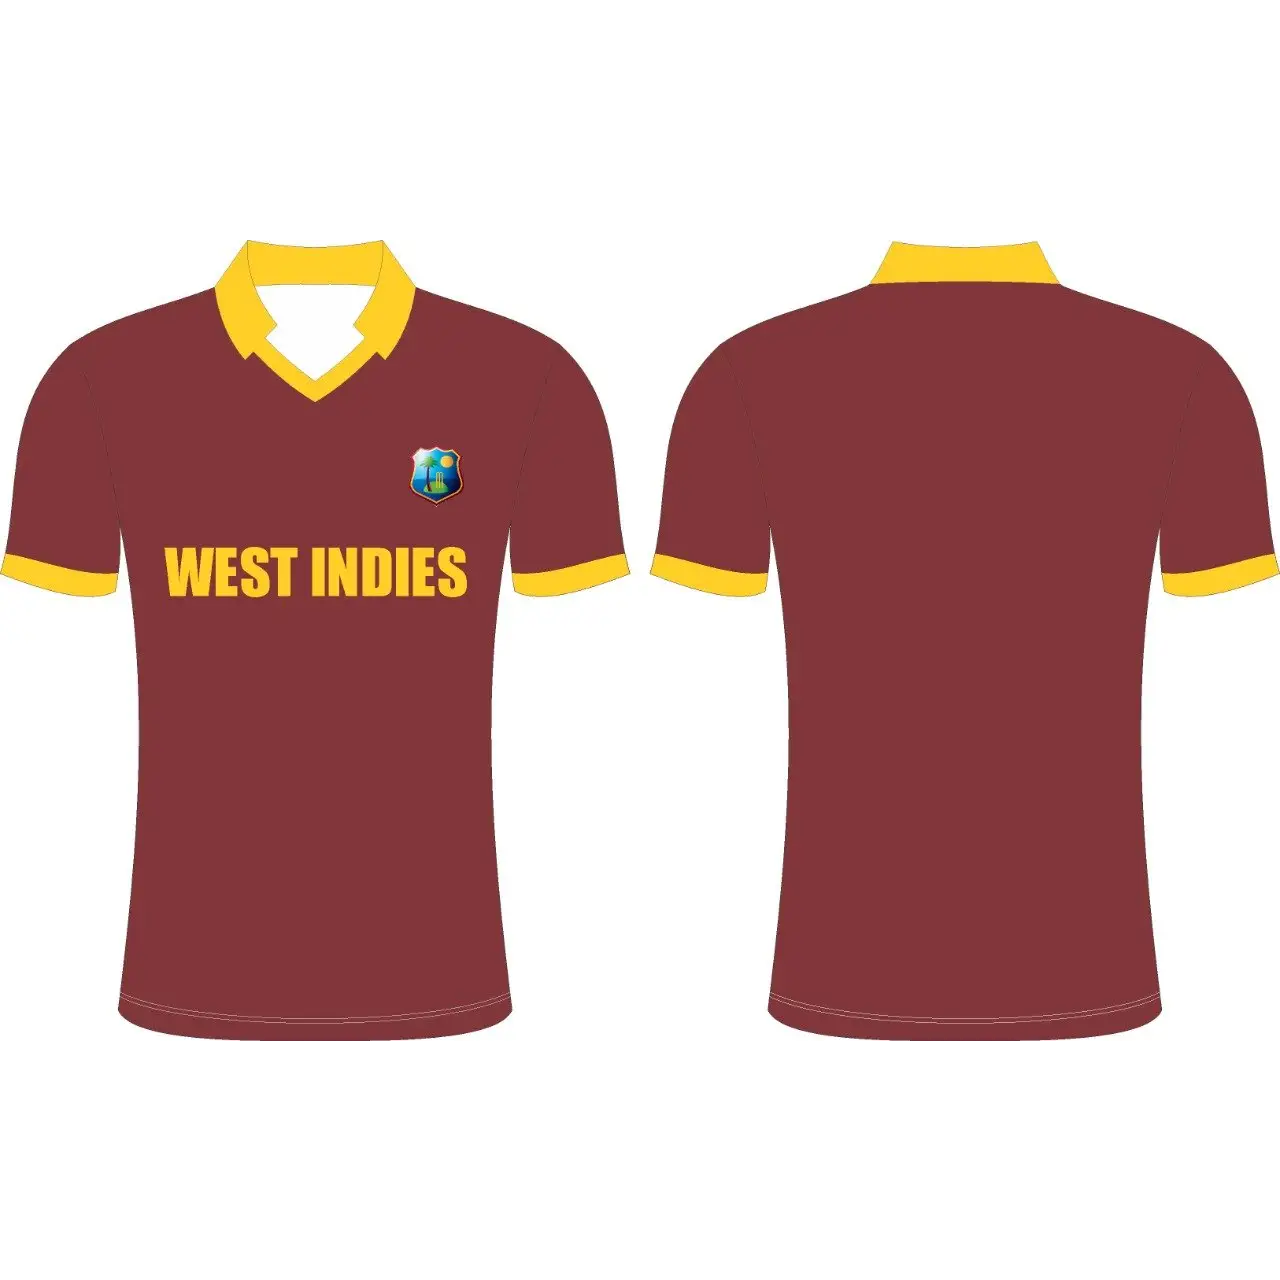 West Indies Cricket Team Maroon Shirt - CLOTHING - SHIRT